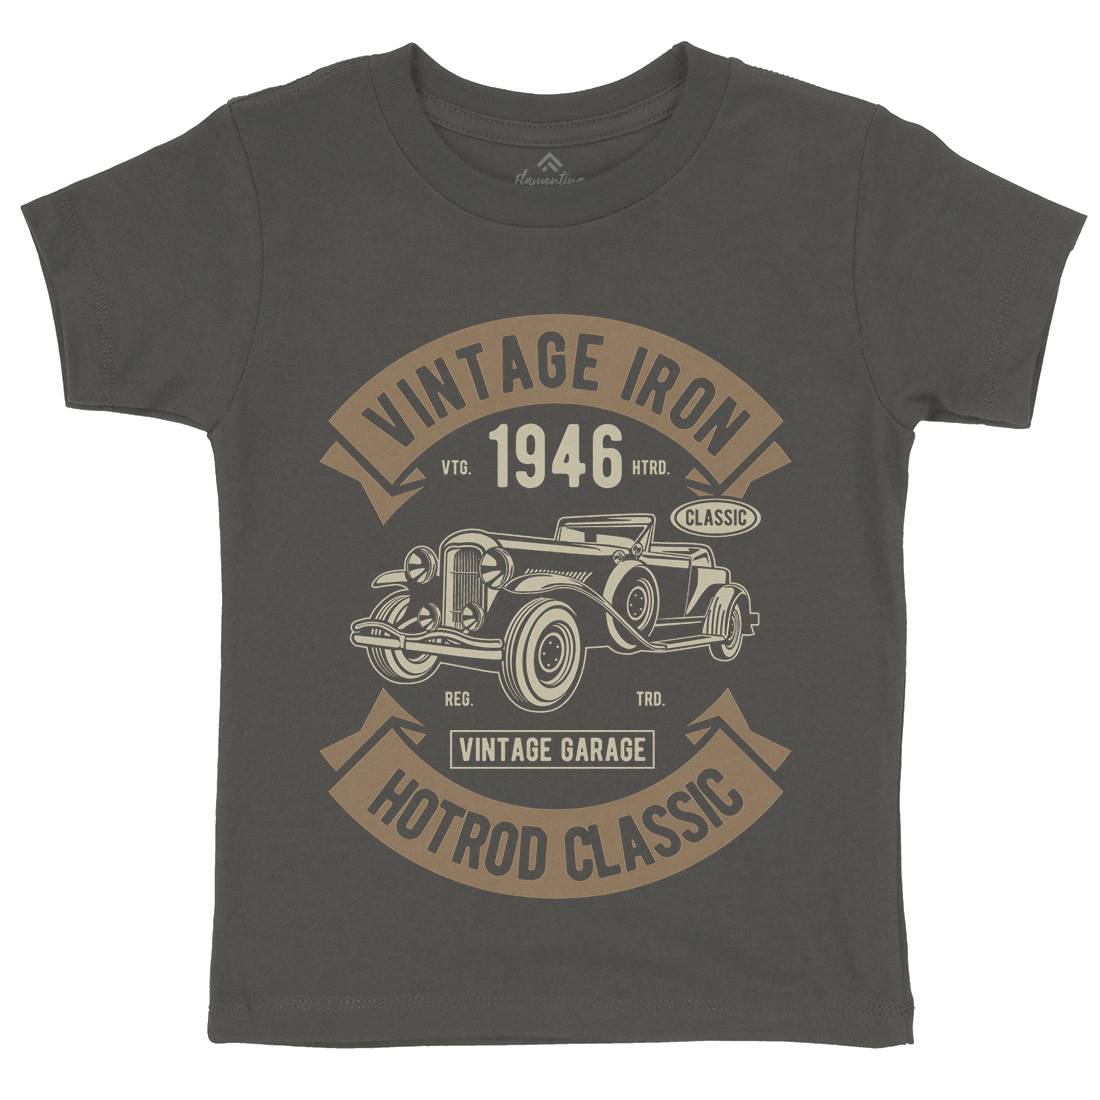 Vintage Iron Classic Kids Crew Neck T-Shirt Cars D595